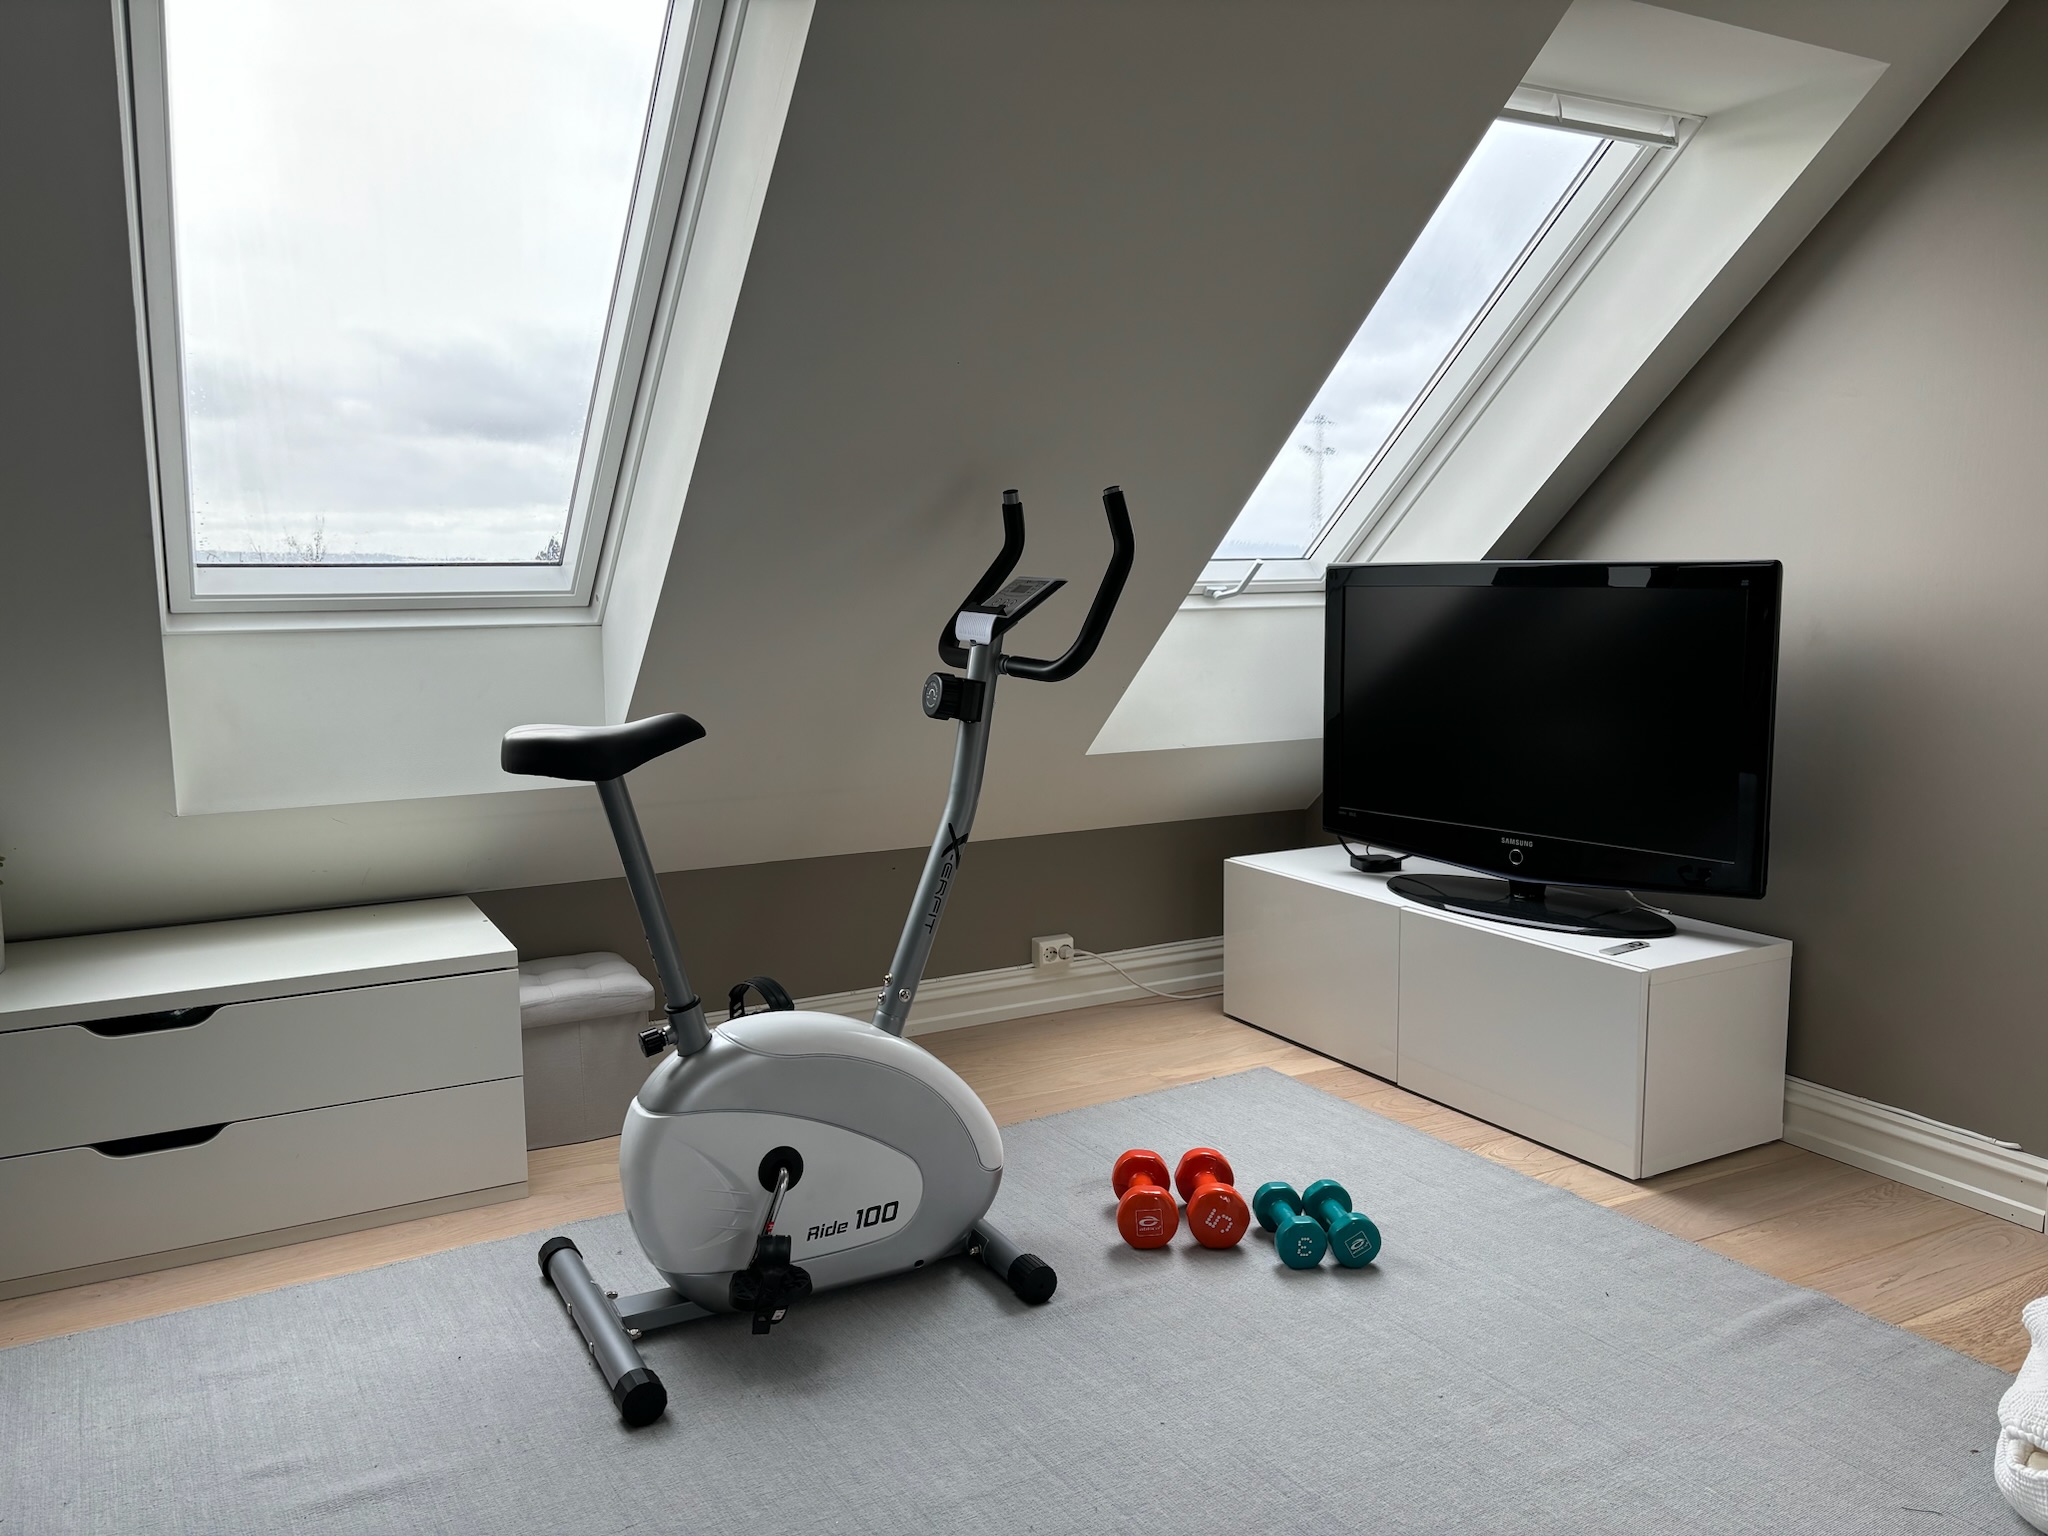 Livingroom/playroom/work out room